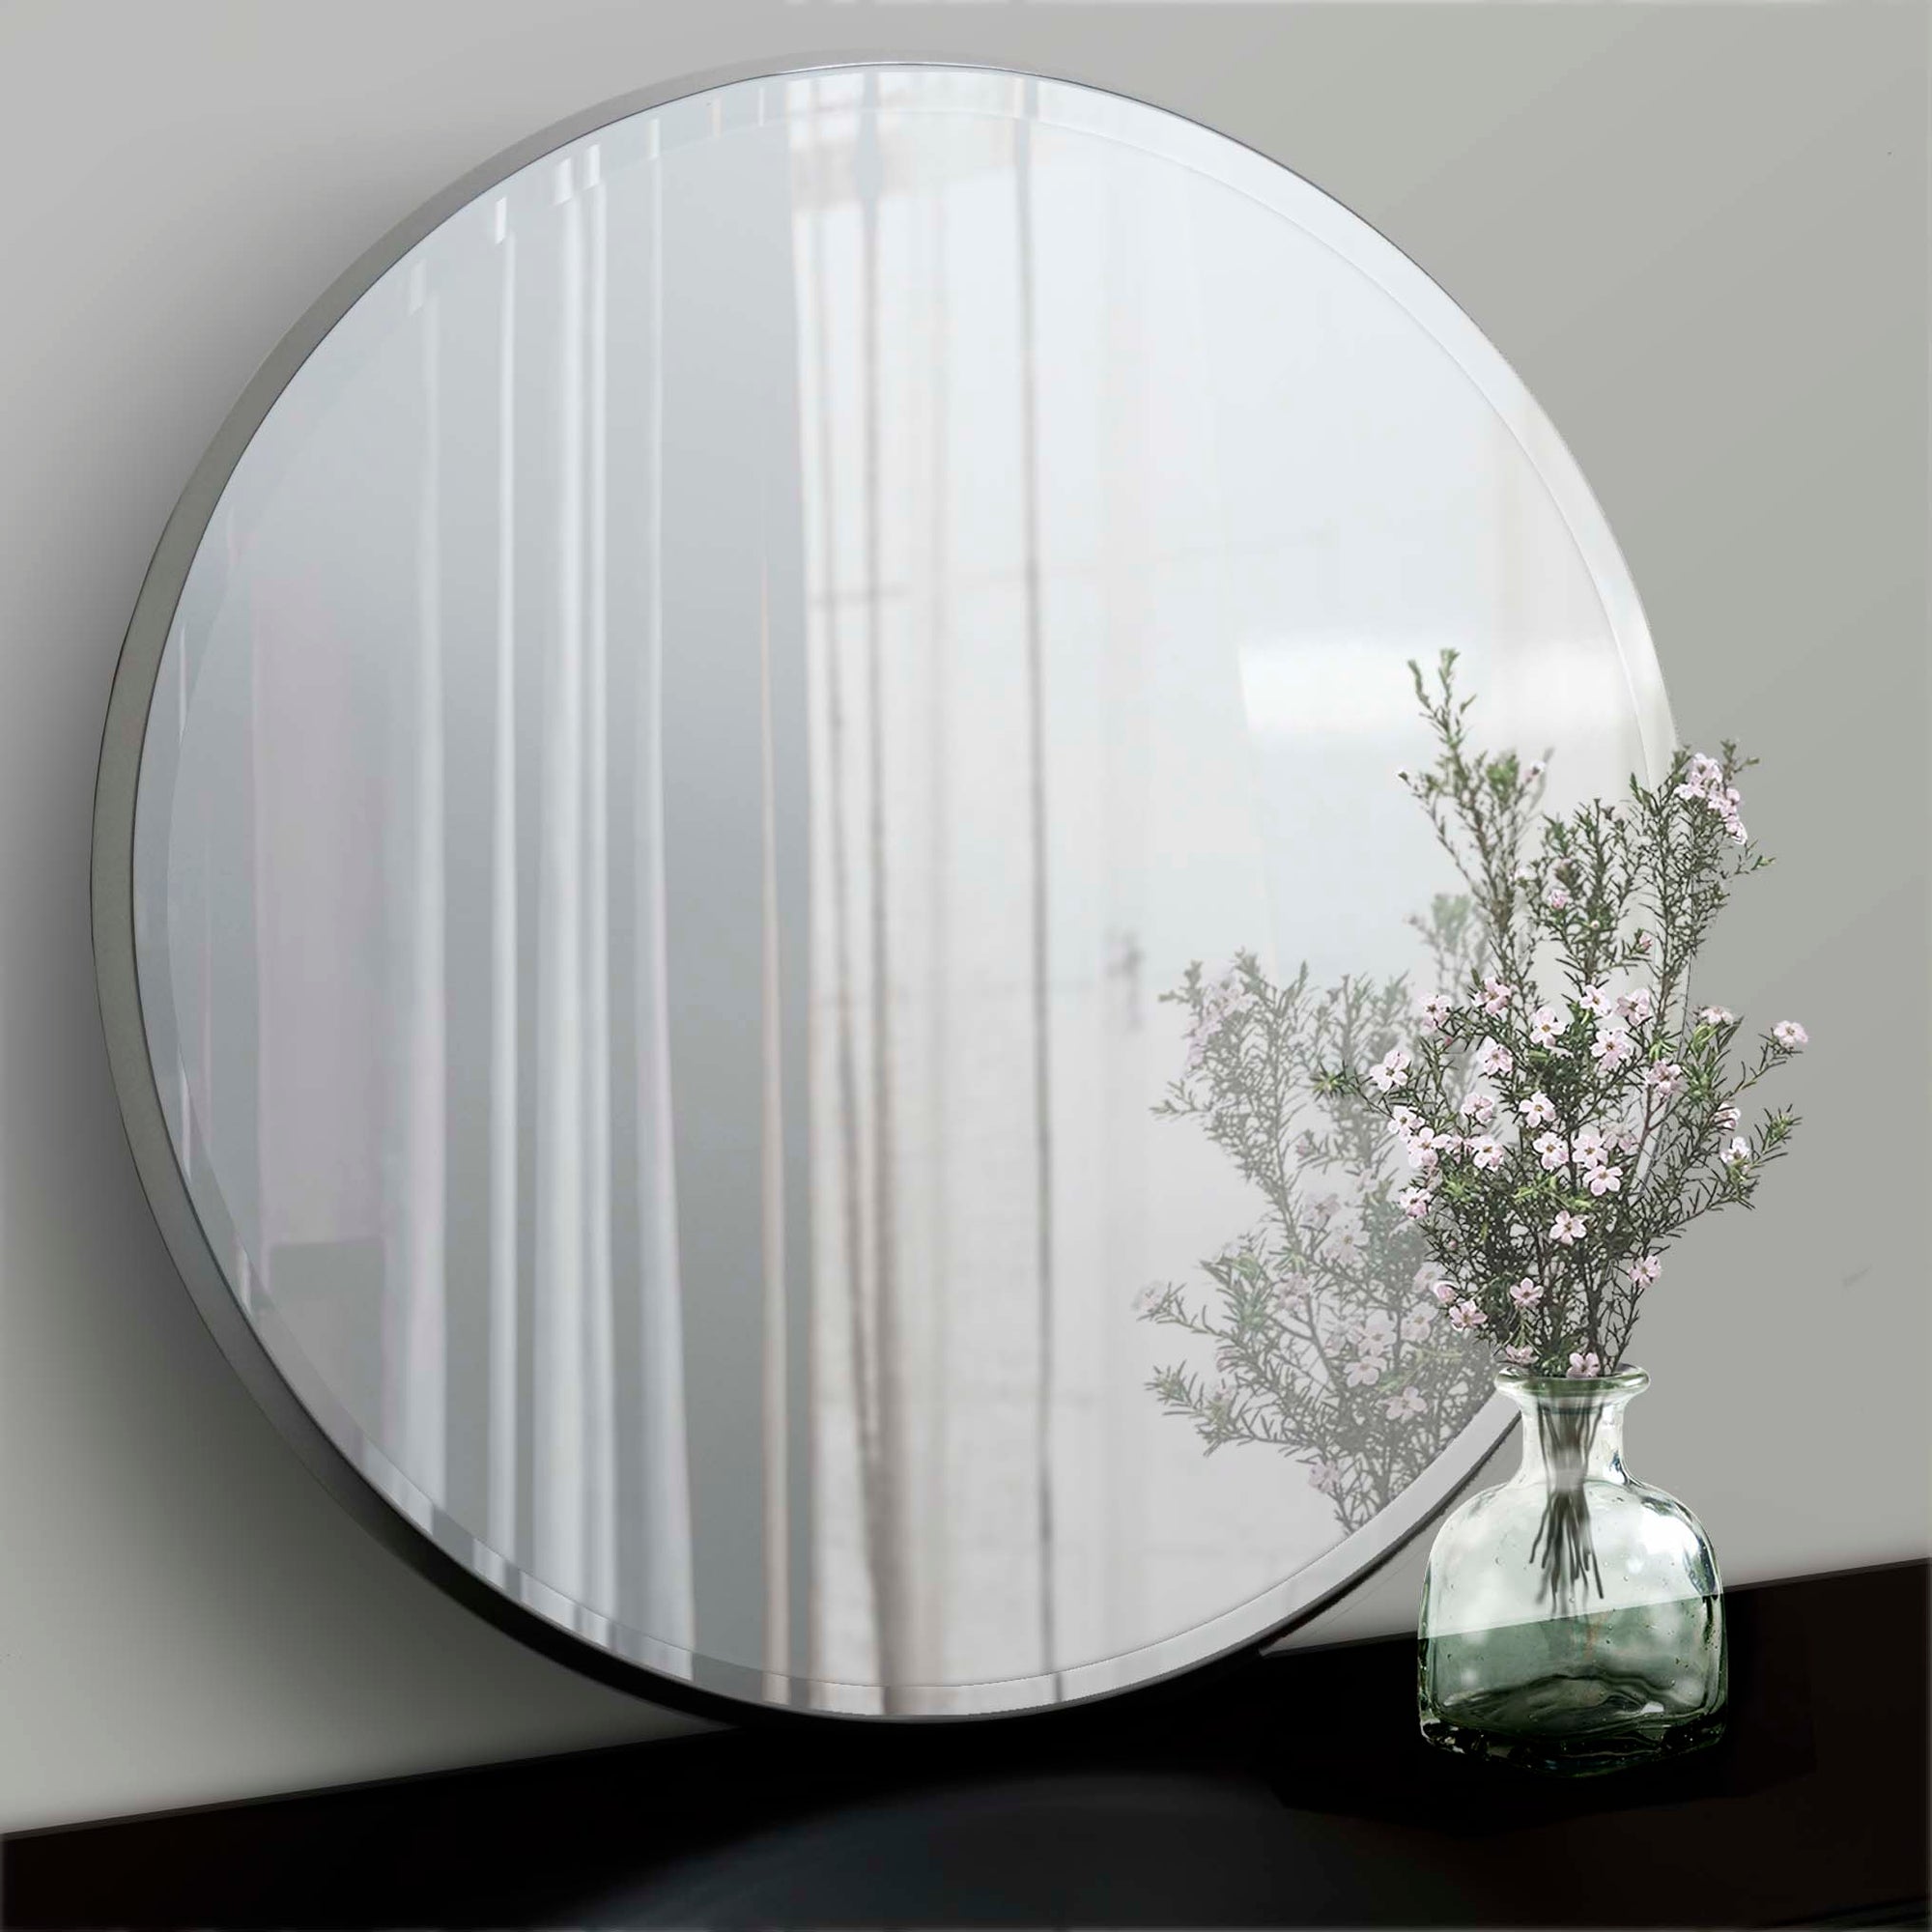 ‘Eclipse’ Round Mirror – Silver tapered frame